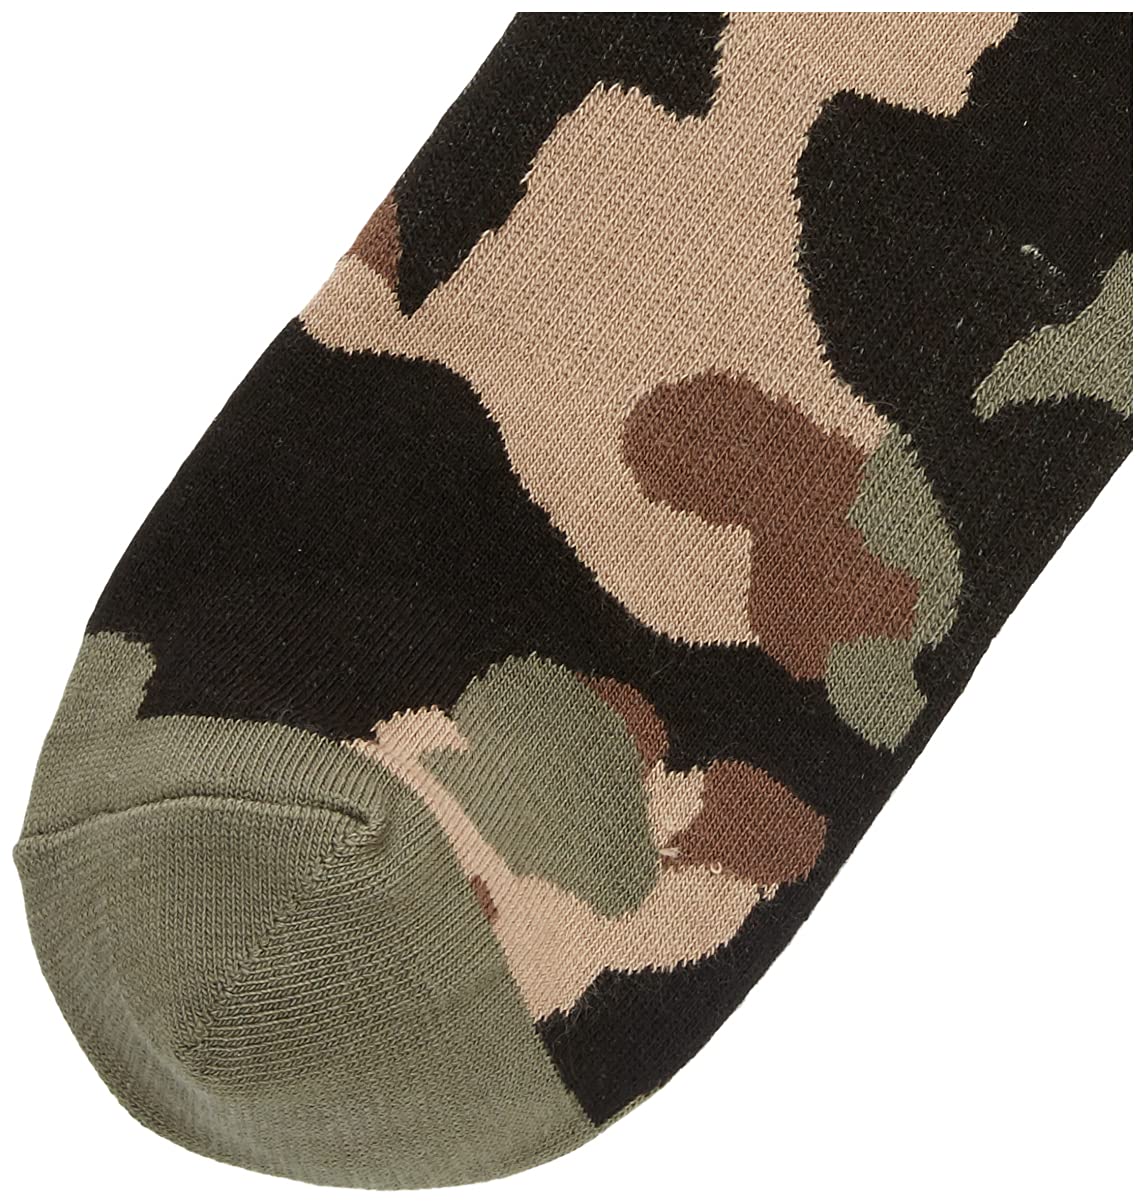 K. Bell Men's Cool Patterns and Design Novelty Crew Socks, Camo (Olive), Shoe Size: 6-12